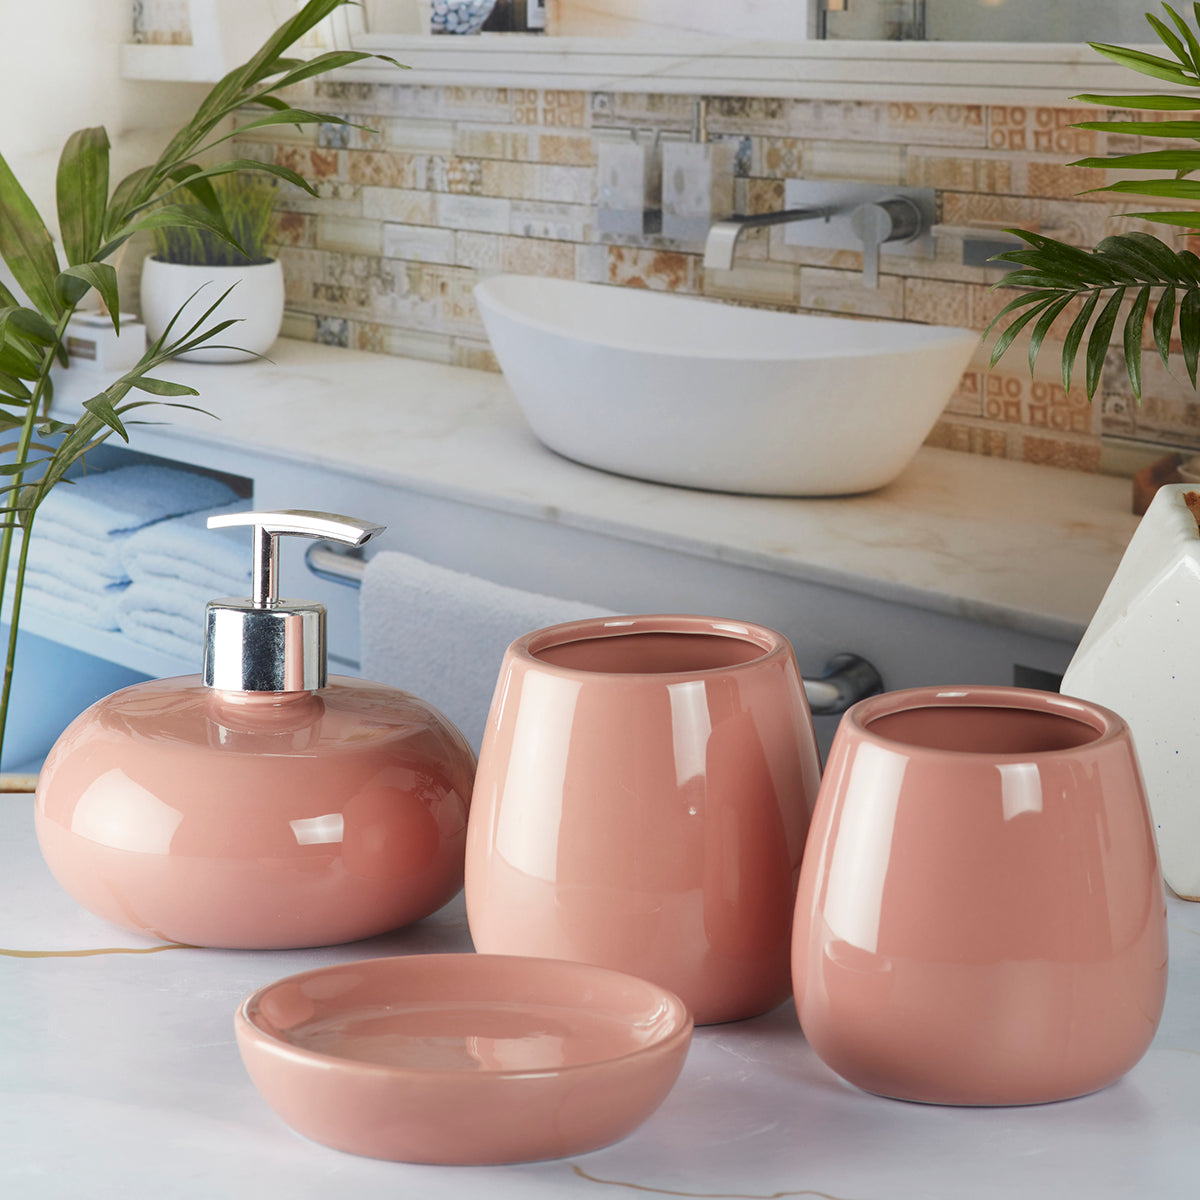 Ceramic Bathroom Accessories Set of 4 Bath Set with Soap Dispenser (5755)